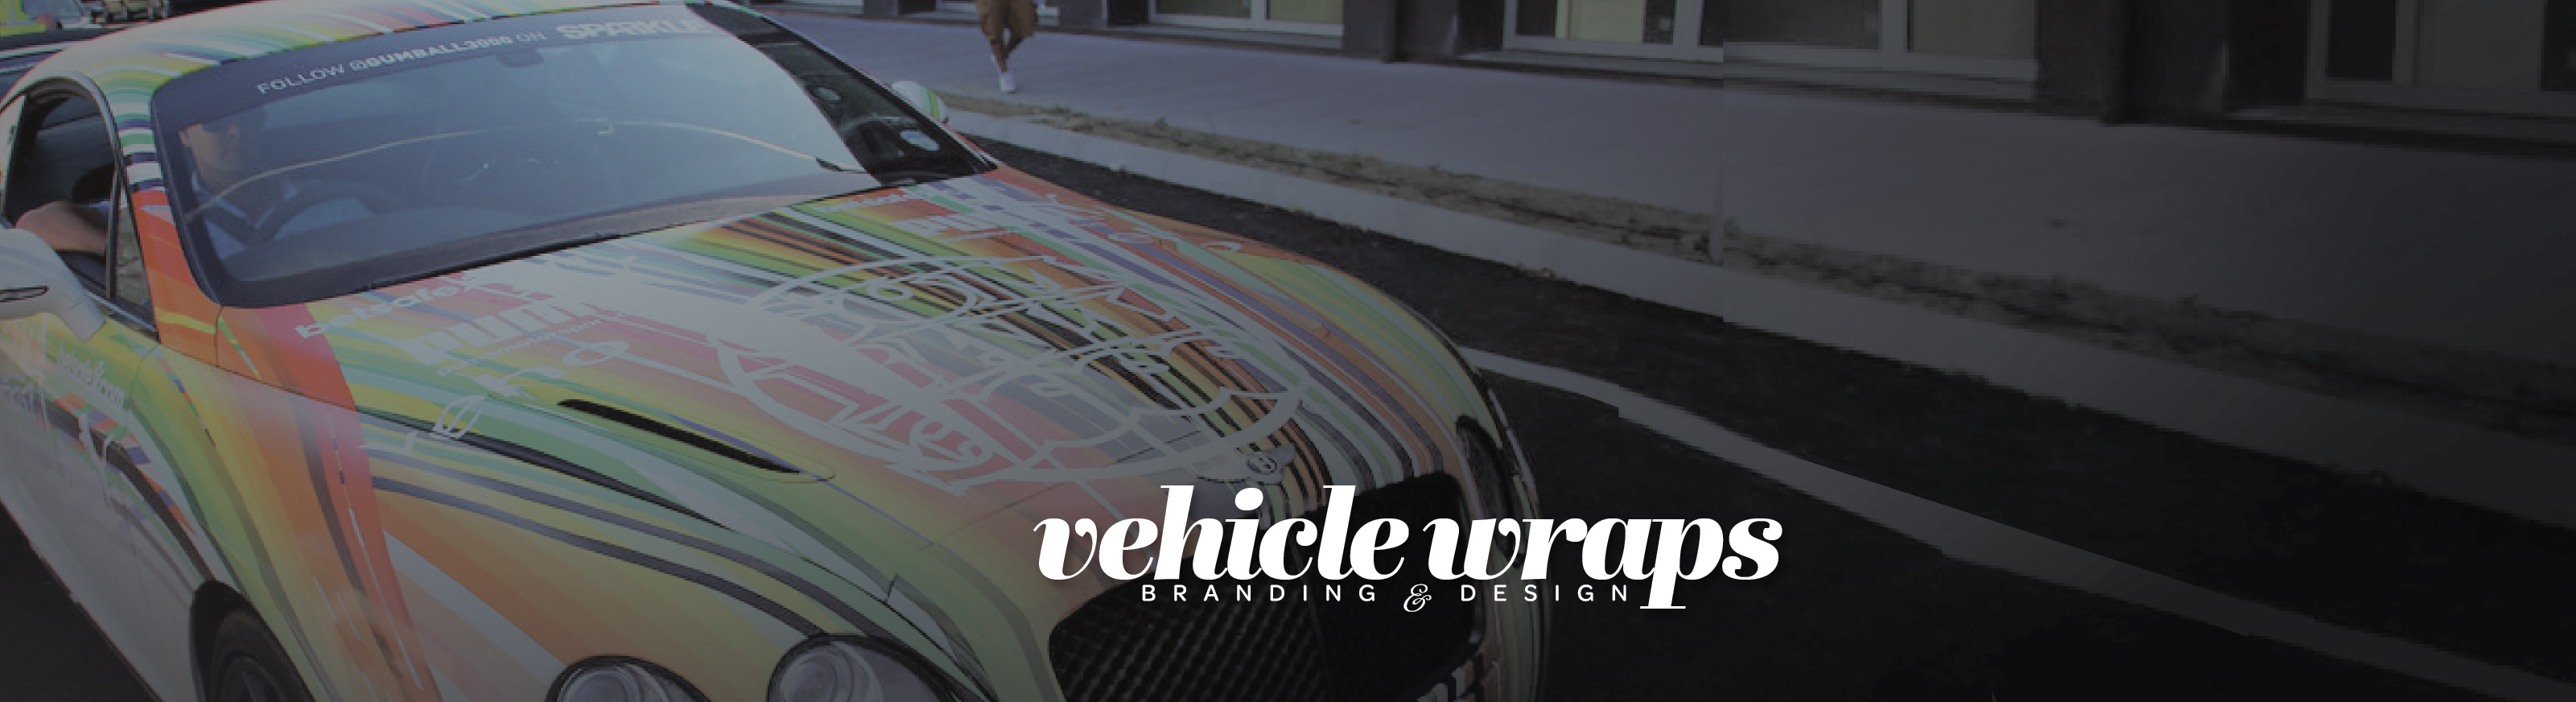 unique creative vehicle wraps installed locally design by victoria zade designer marketing